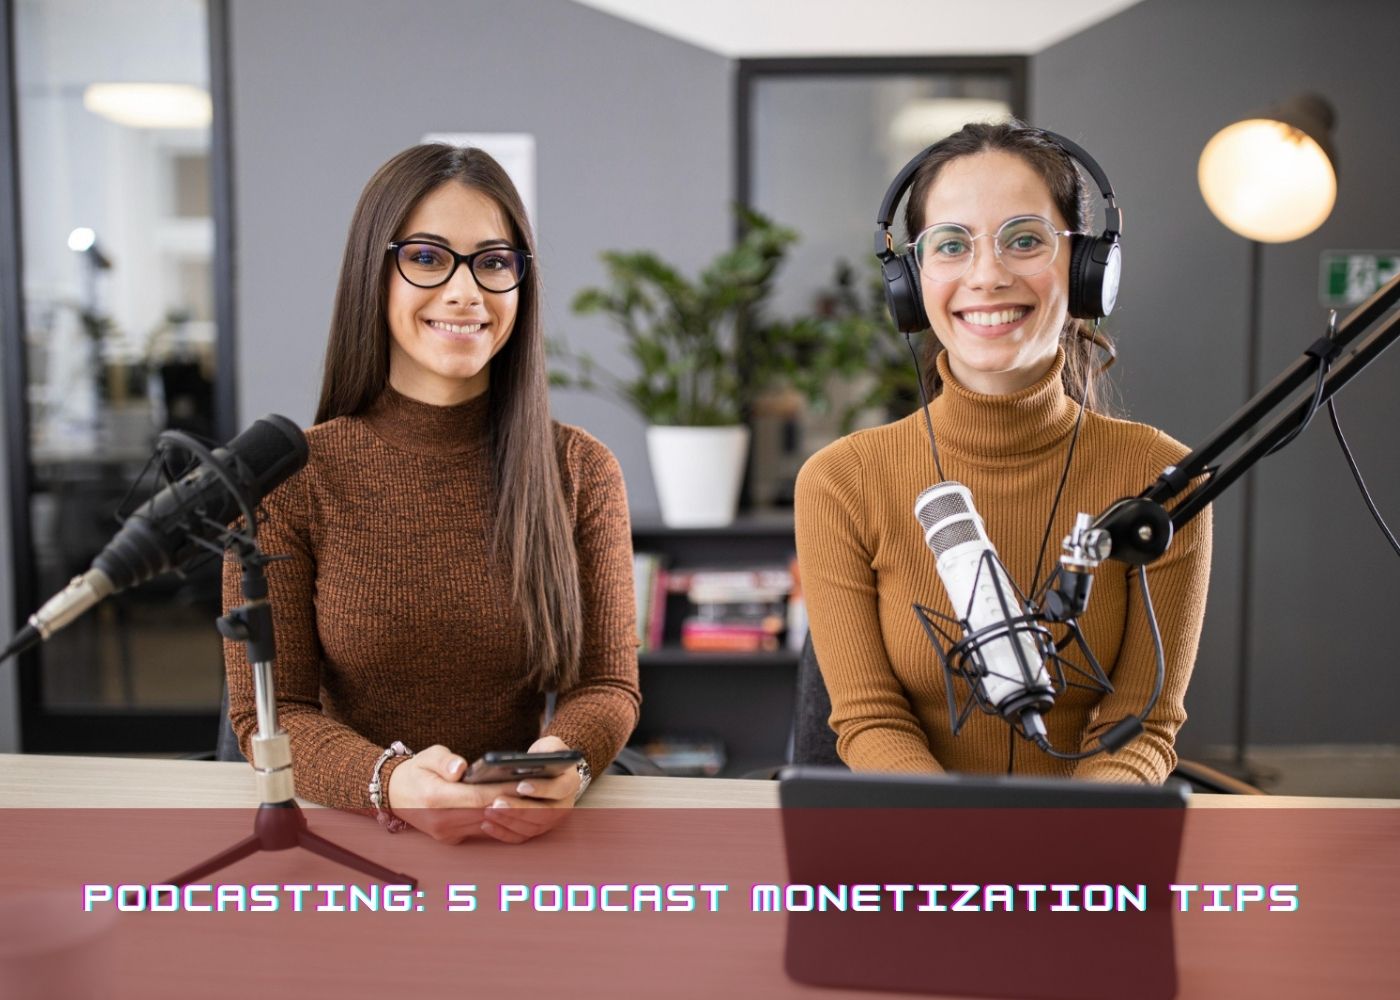 Podcasting: 5 Podcast Monetization Tips 